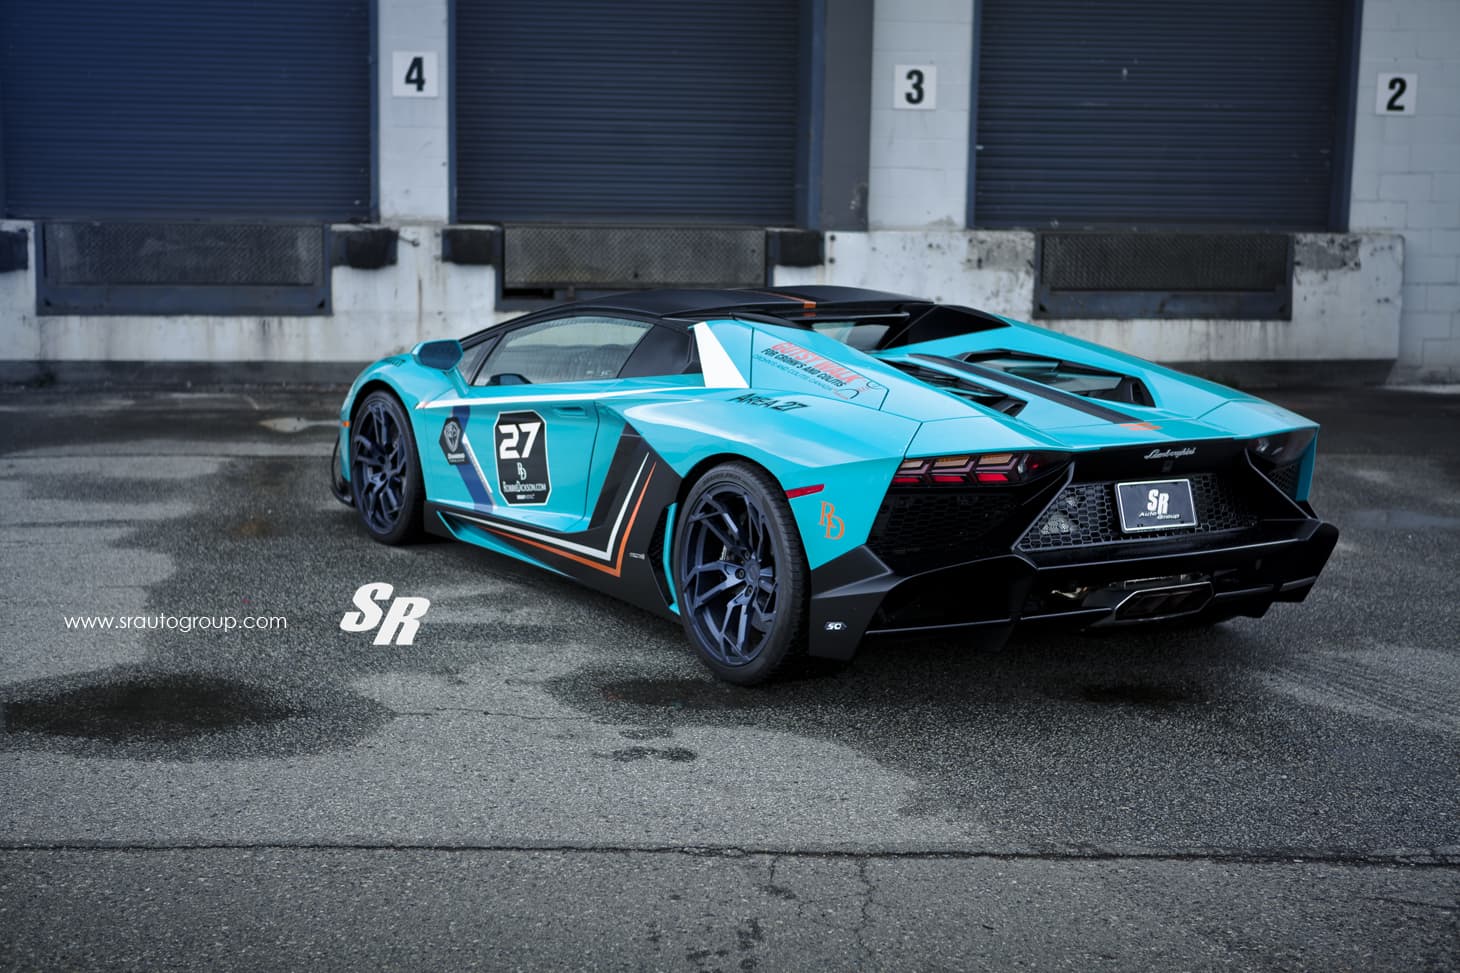 Lamborghini-Aventador-sr-autogroup-6